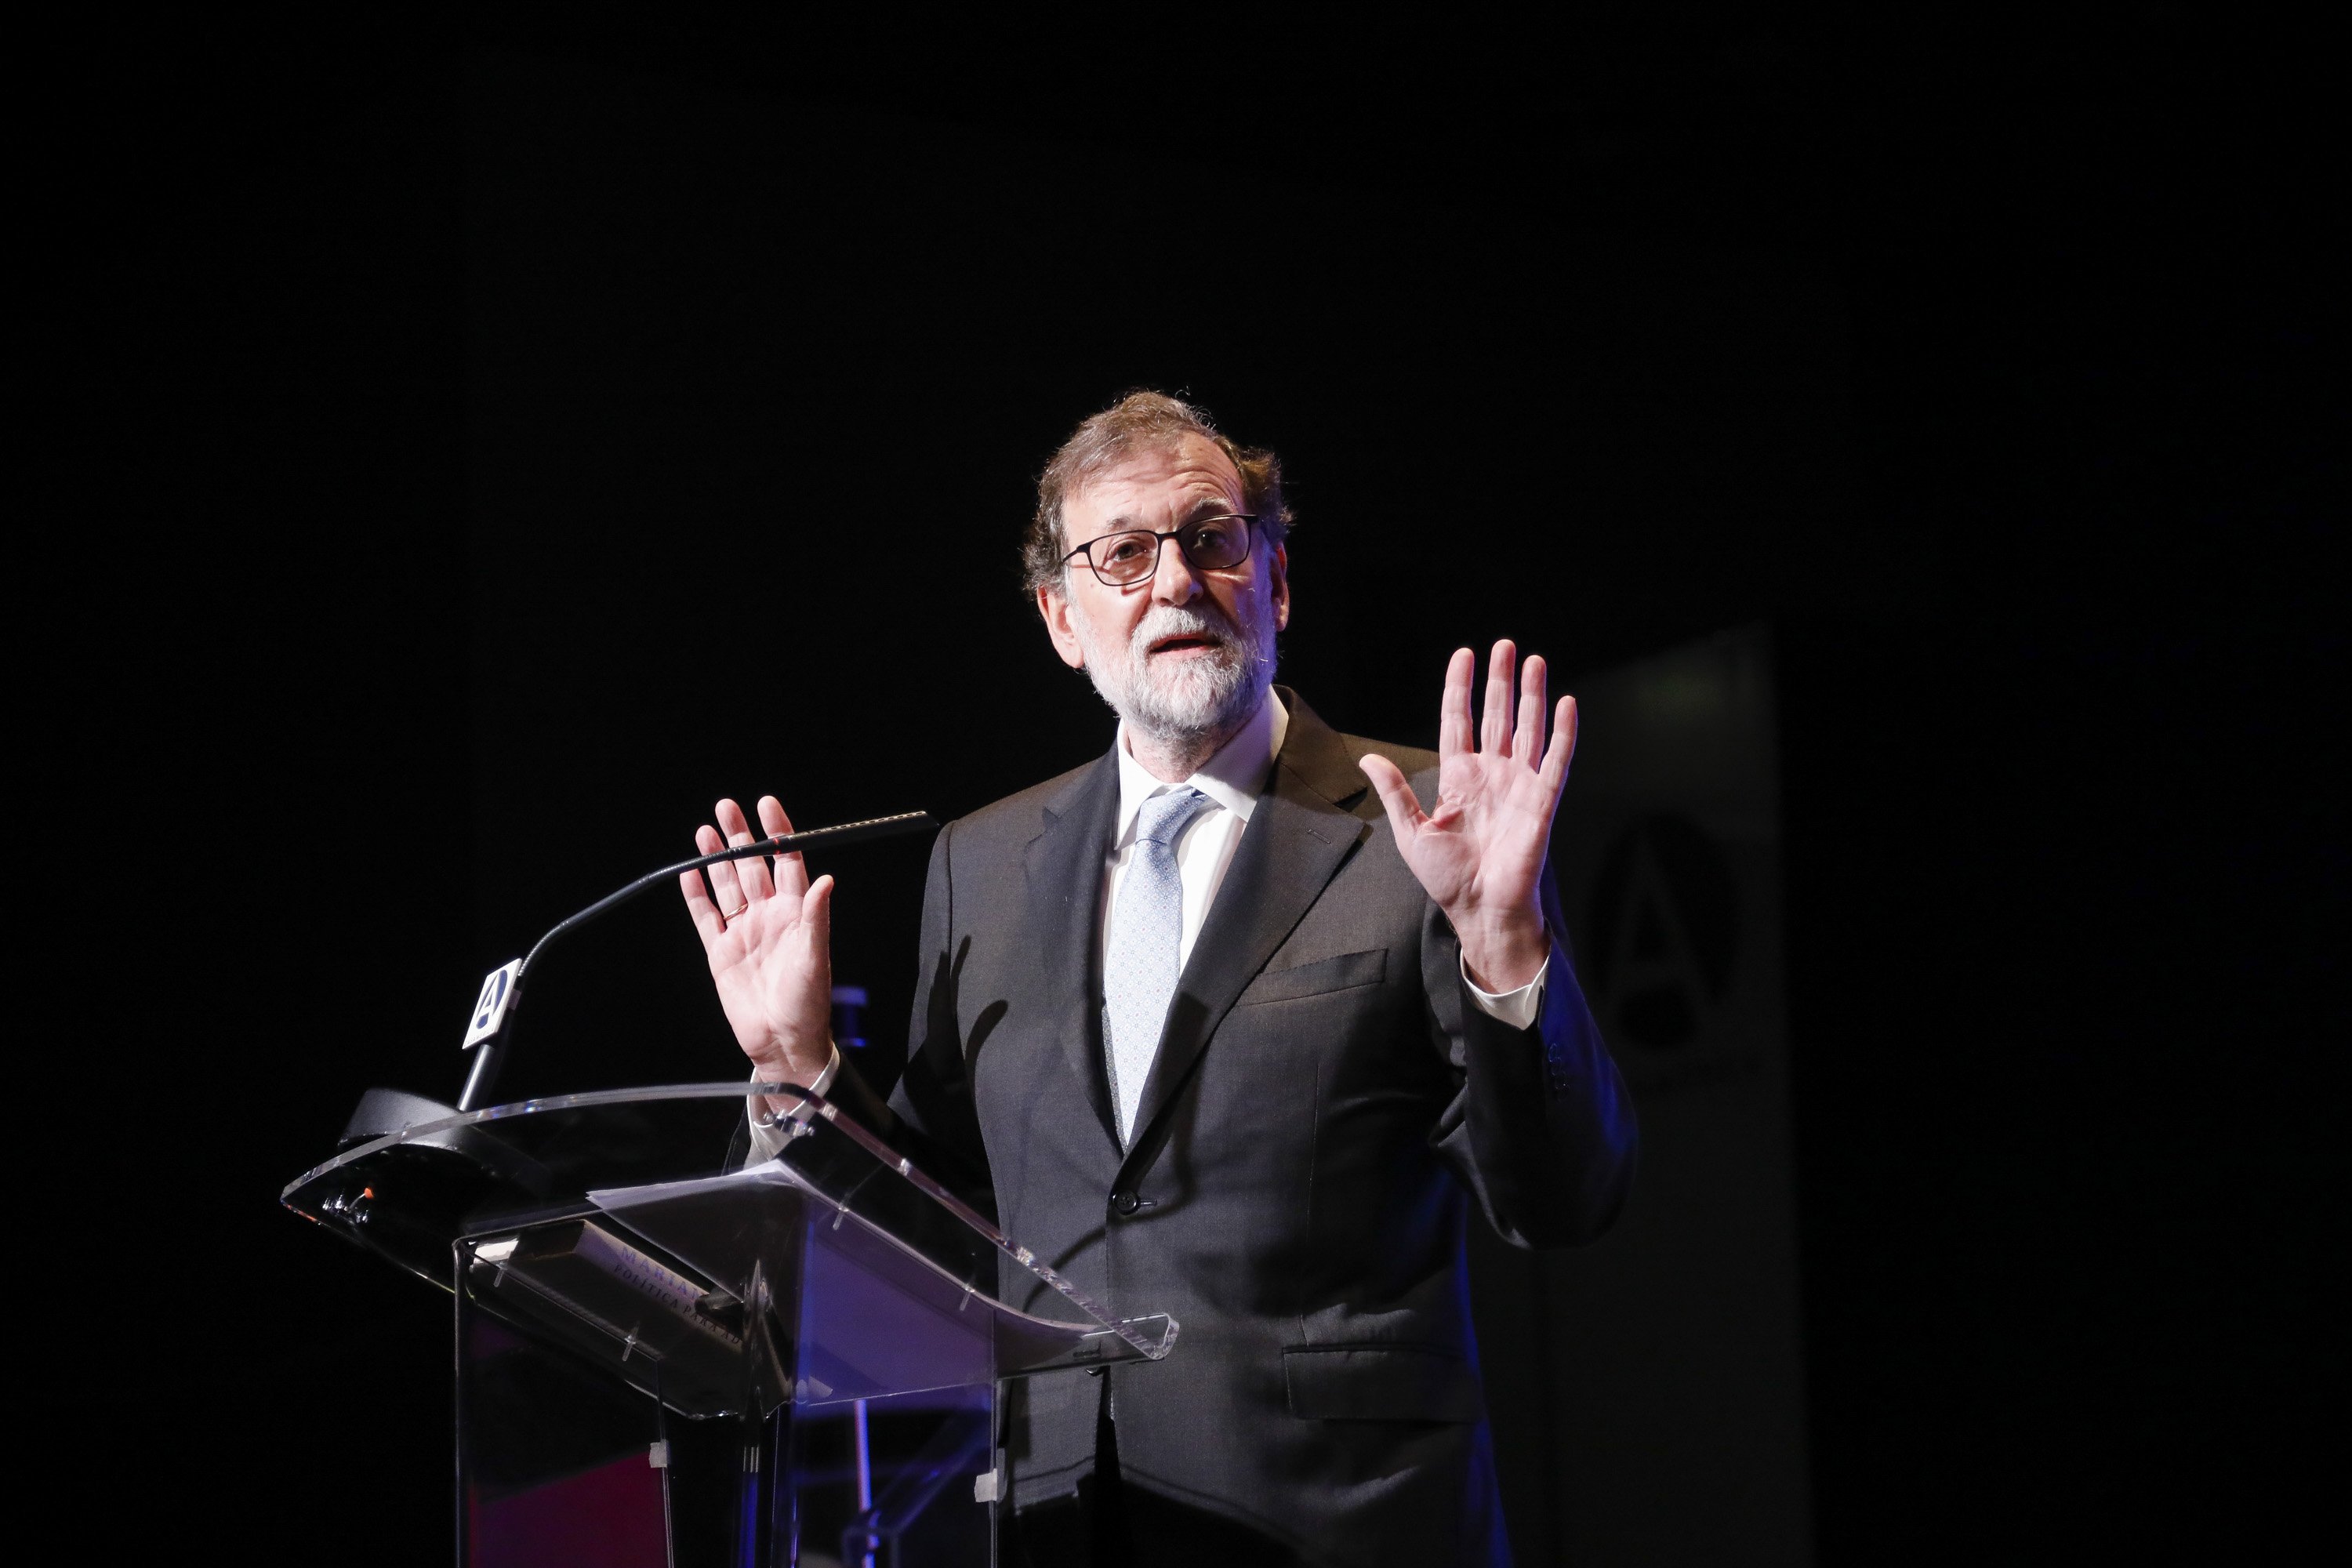 Mariano Rajoy, expresident del govern espanyol Efe